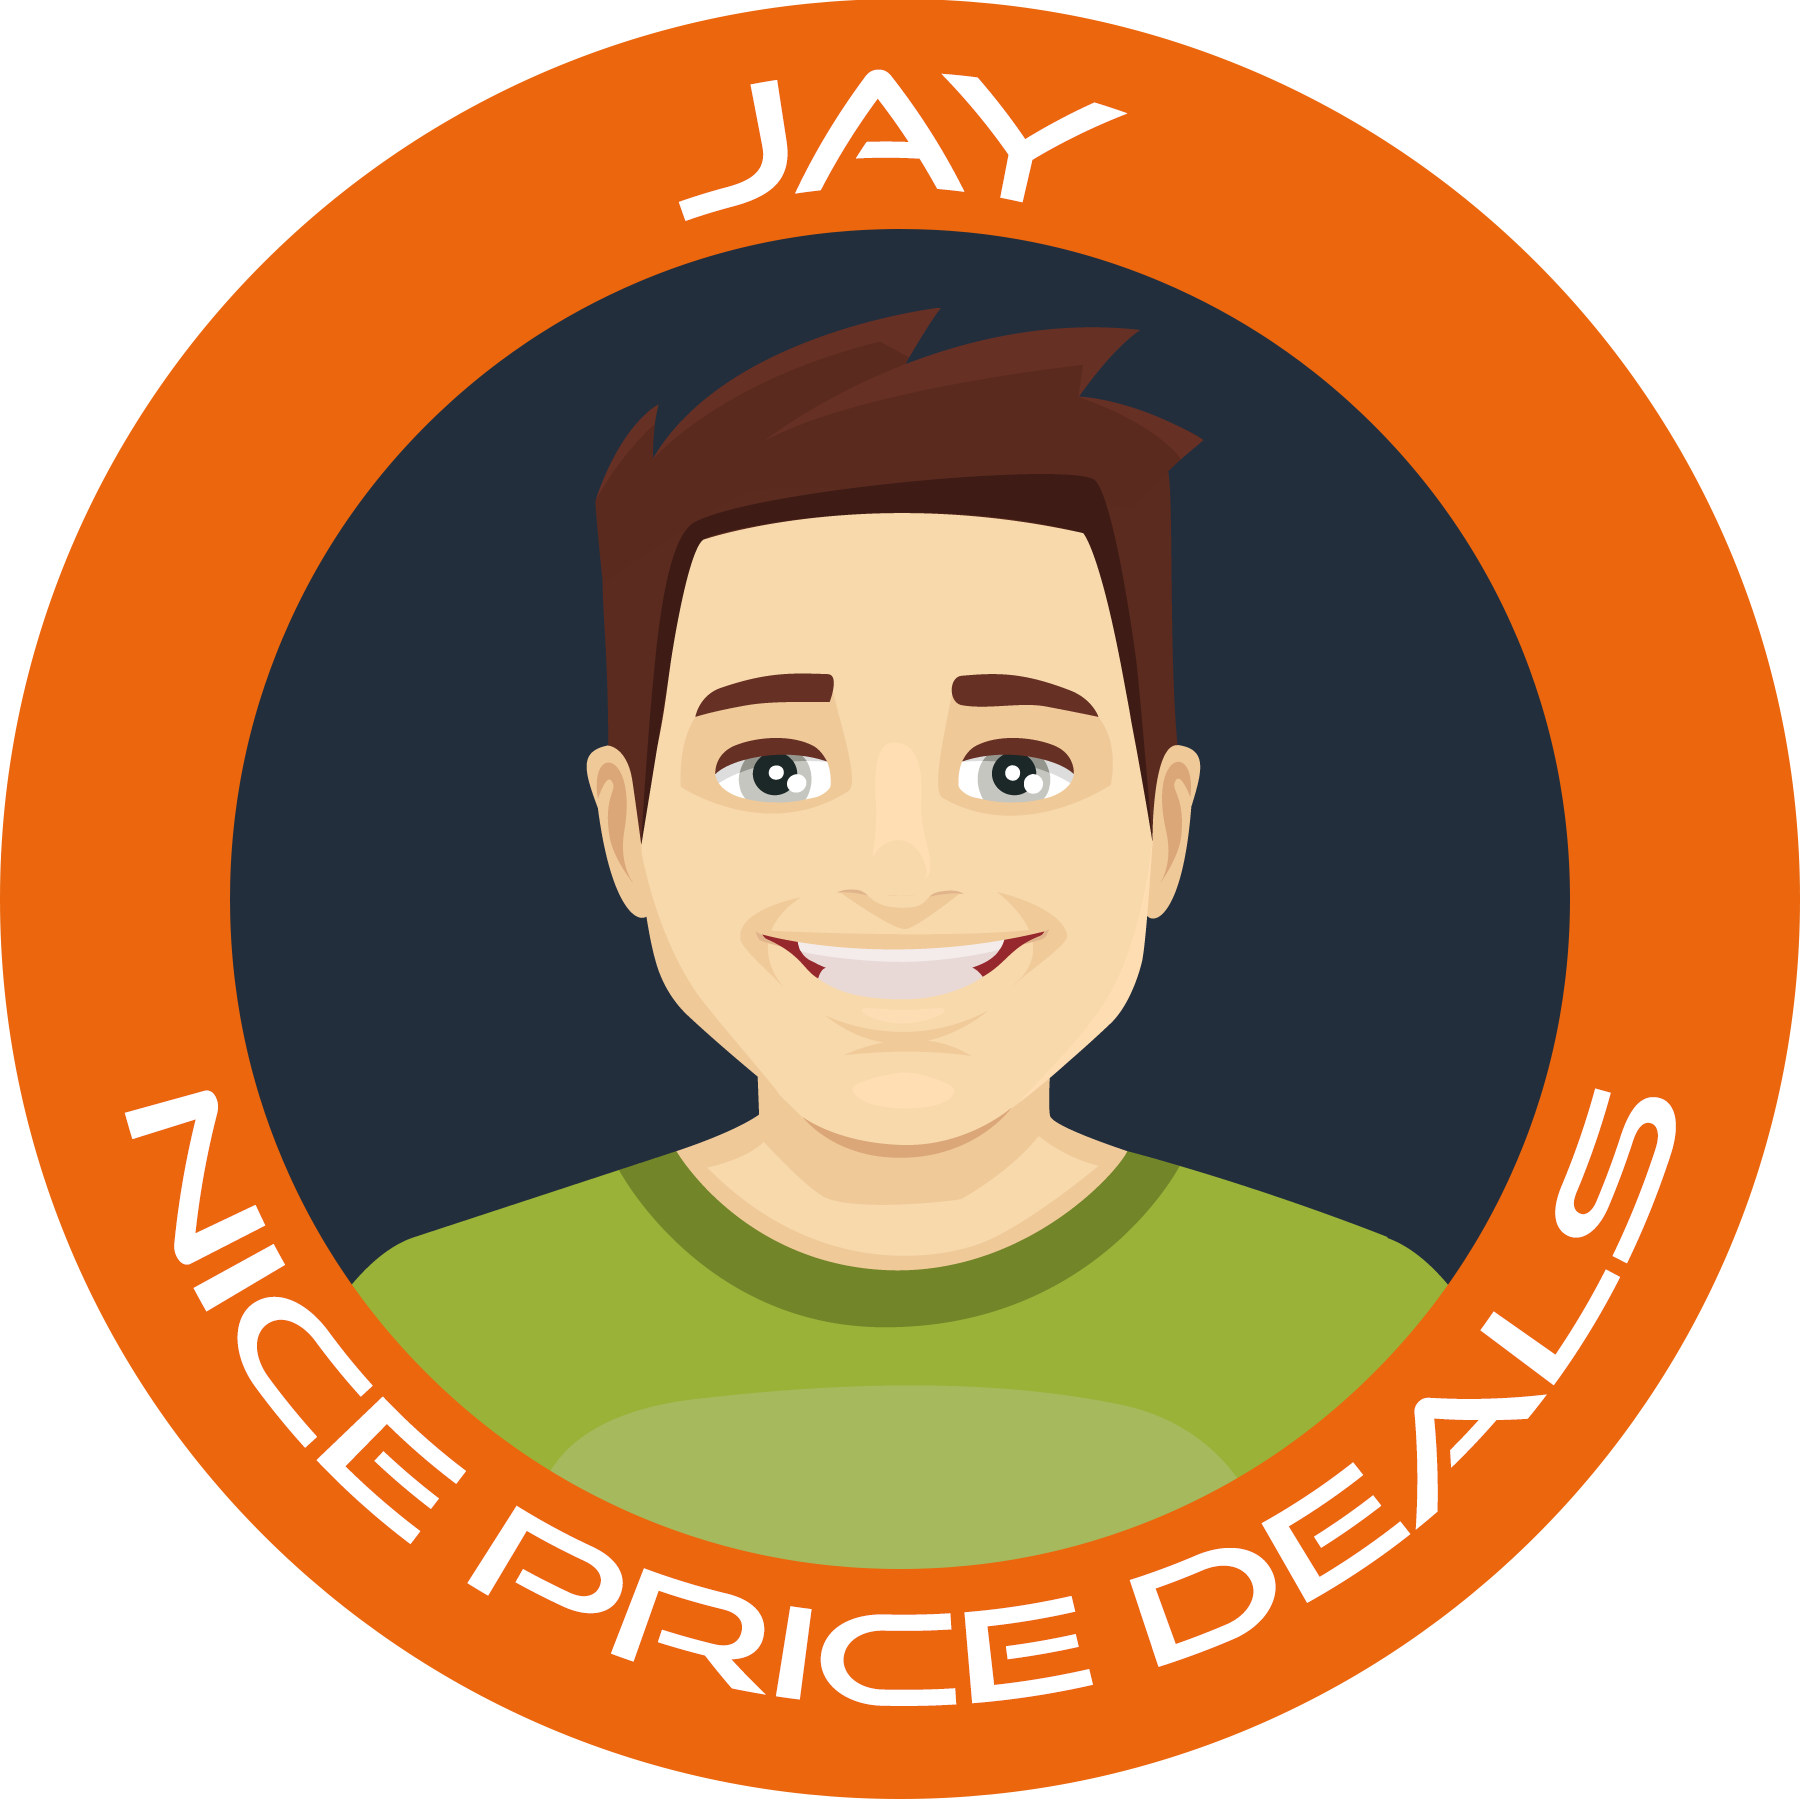 Jay Nice Price Deals